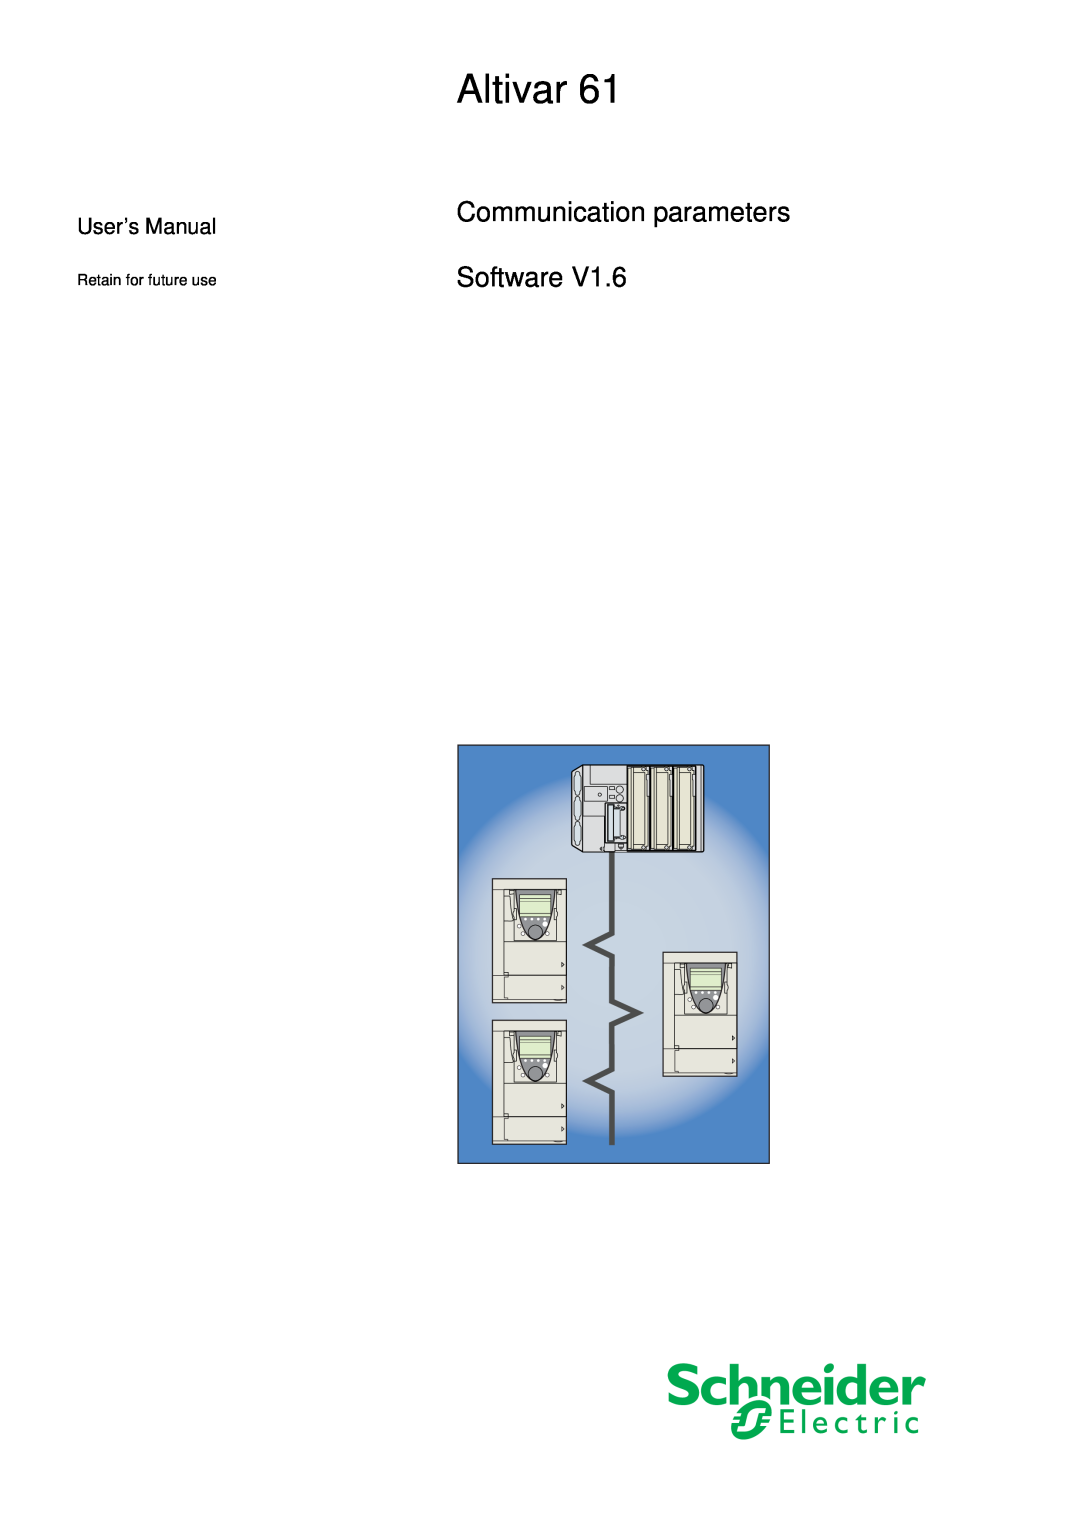 Schneider Electric 61 user manual Altivar, Communication parameters Software, User’s Manual 